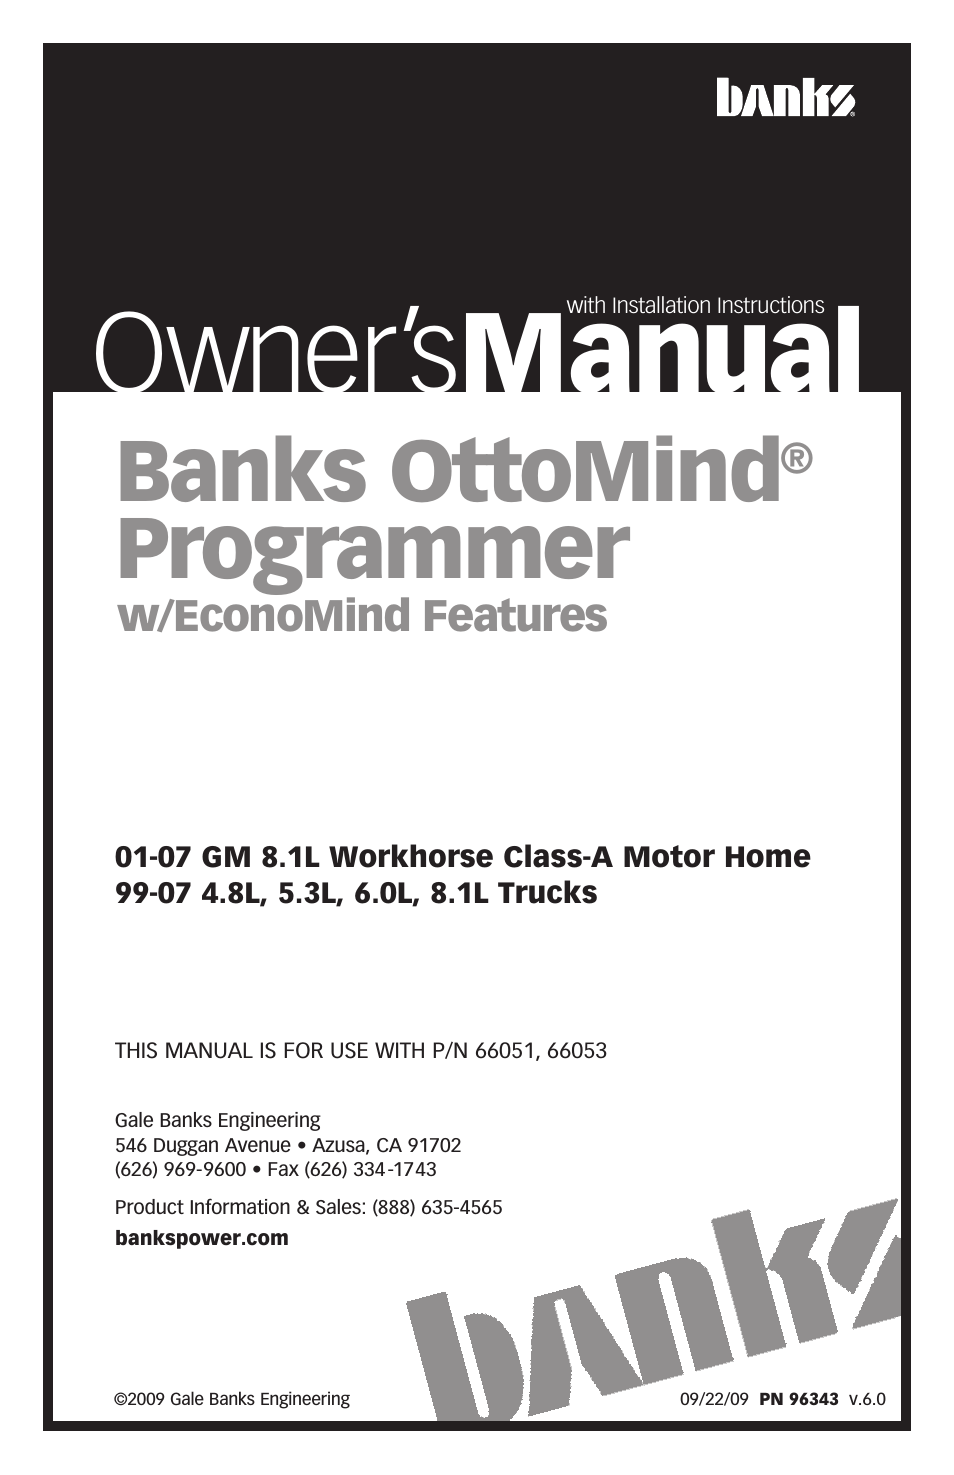 GM Motorhomes: (Gas ’01 - 10 8.1L Workhorse) Programmer- Ottomind Programmer '99-07 Chevy-GMC 4.8L, 5.3L, 6.0L, 8.1L Trucks '01-07 Chevy-GMC 8.1L WorkHorse Class A Motor Home